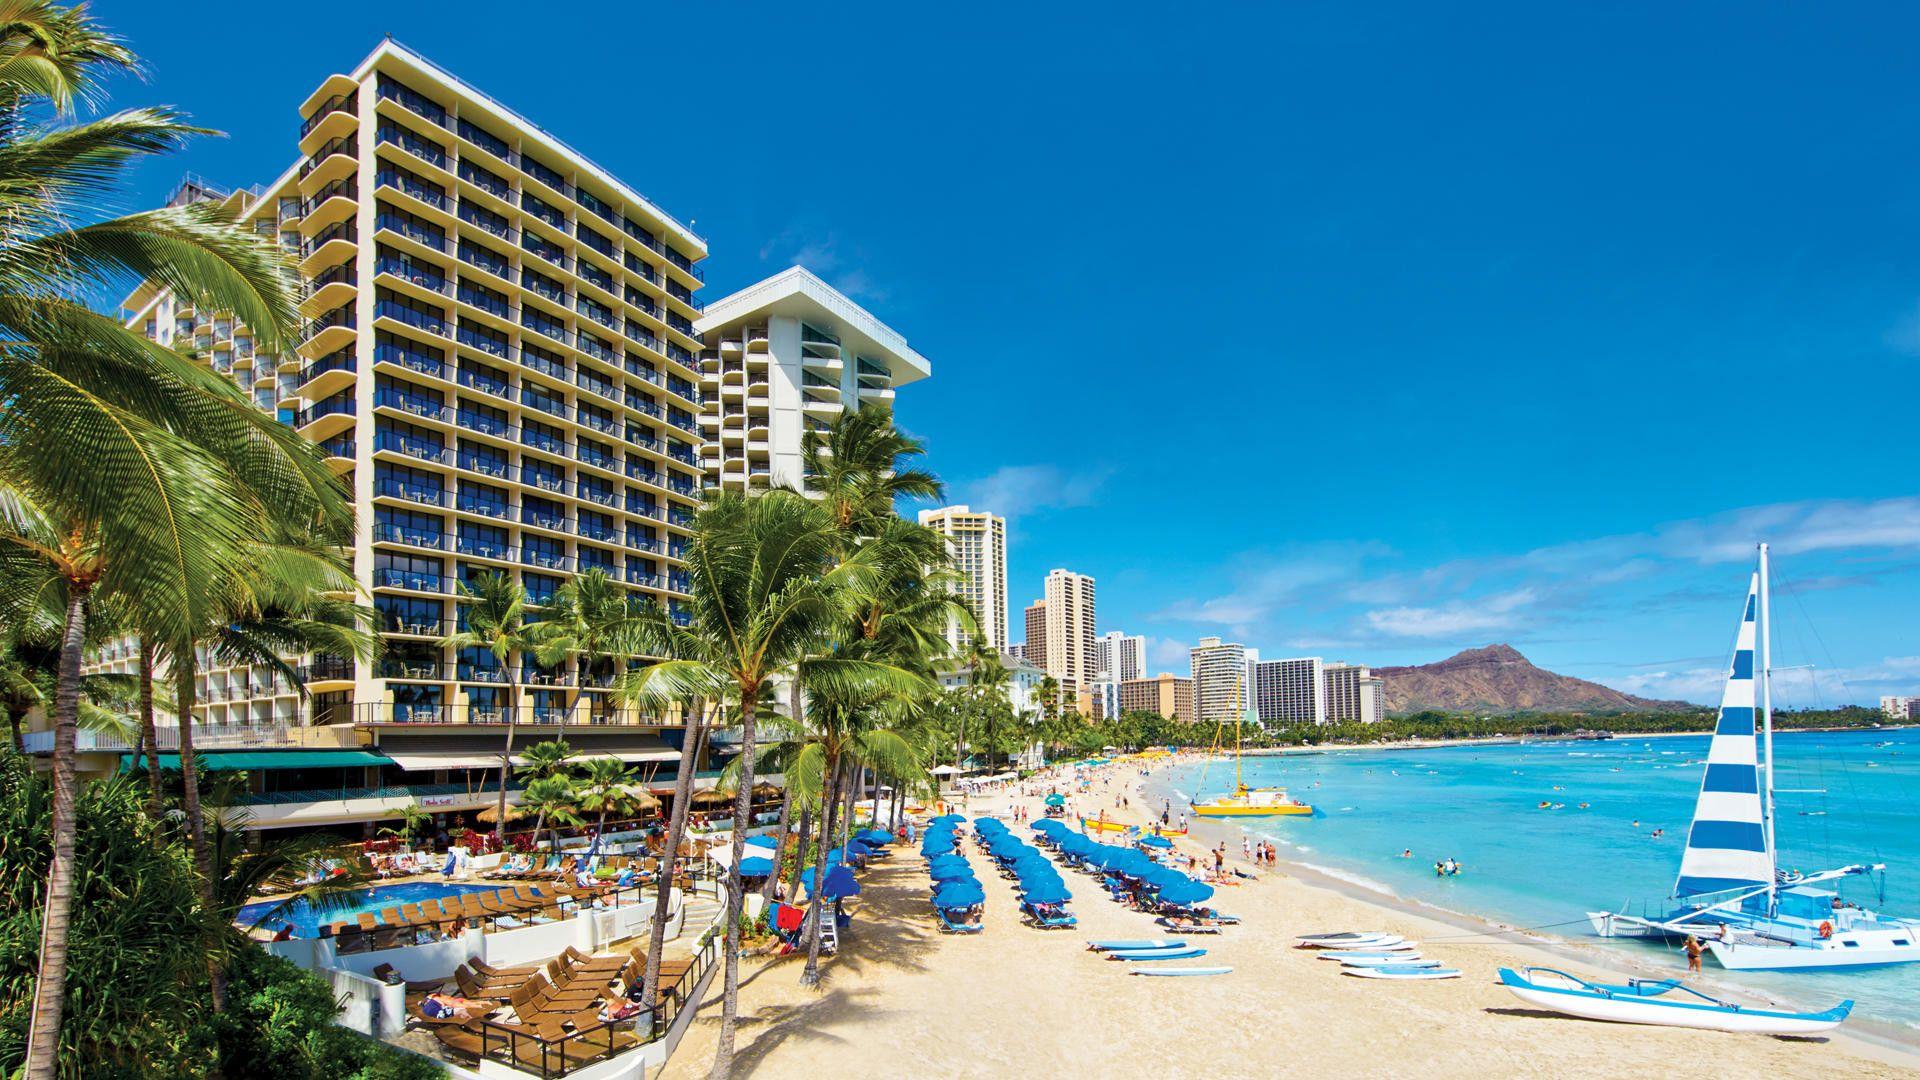 Waikiki Beach Desktop Wallpaper. Beautiful image HD Picture